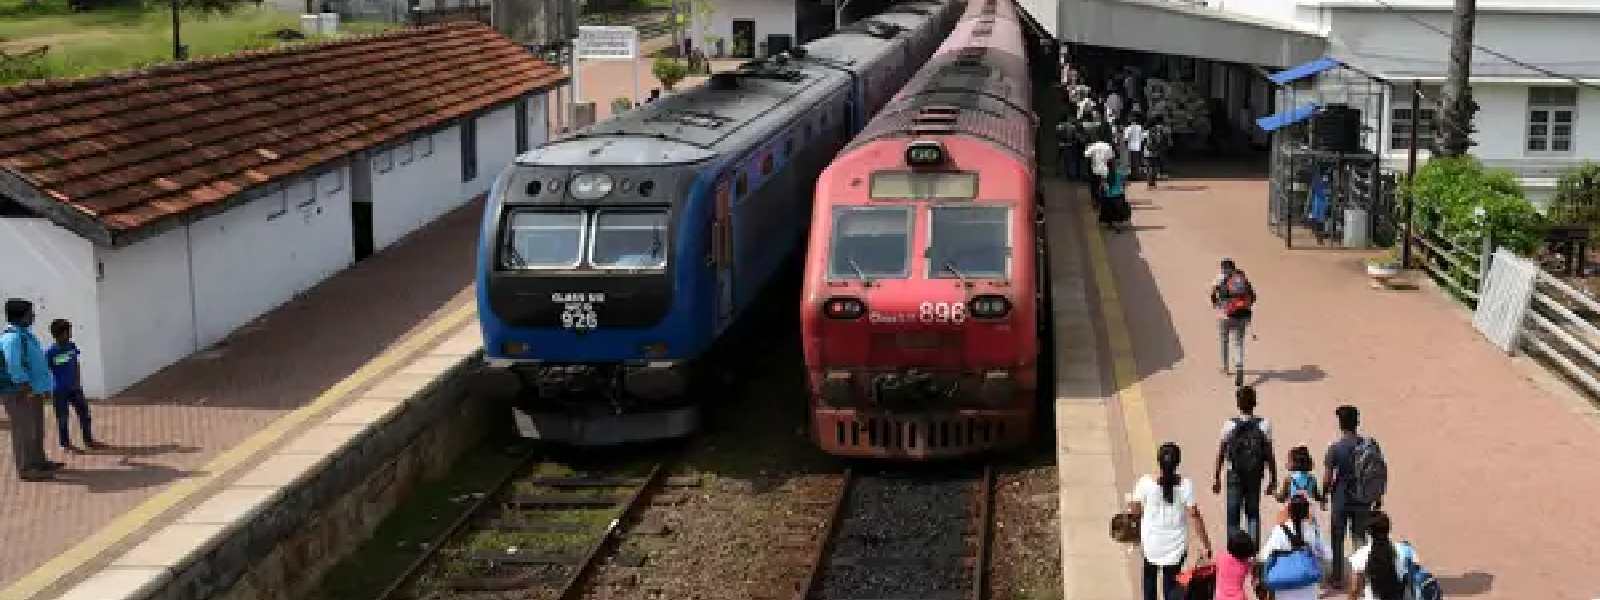 Six trains plying along the coastal line cancelled